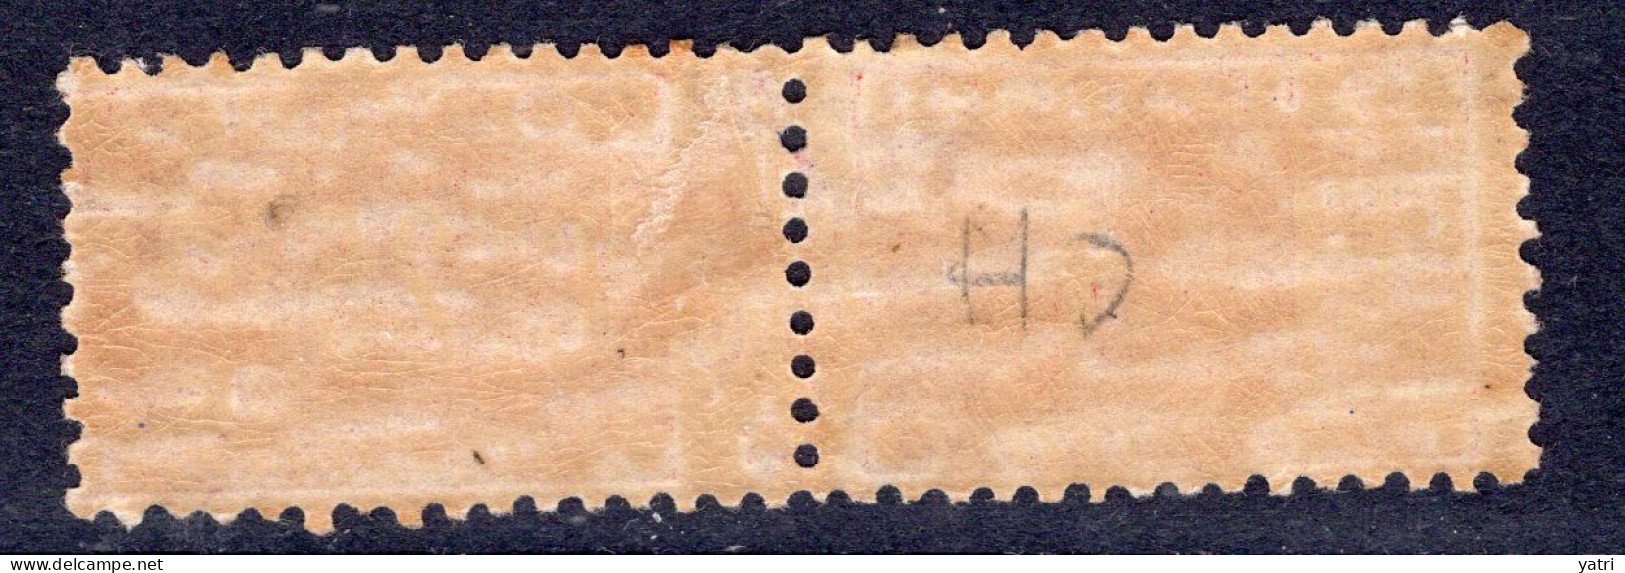 Regno D'Italia (1914) - Pacchi Postali - 20 Cent. * - Colis-postaux